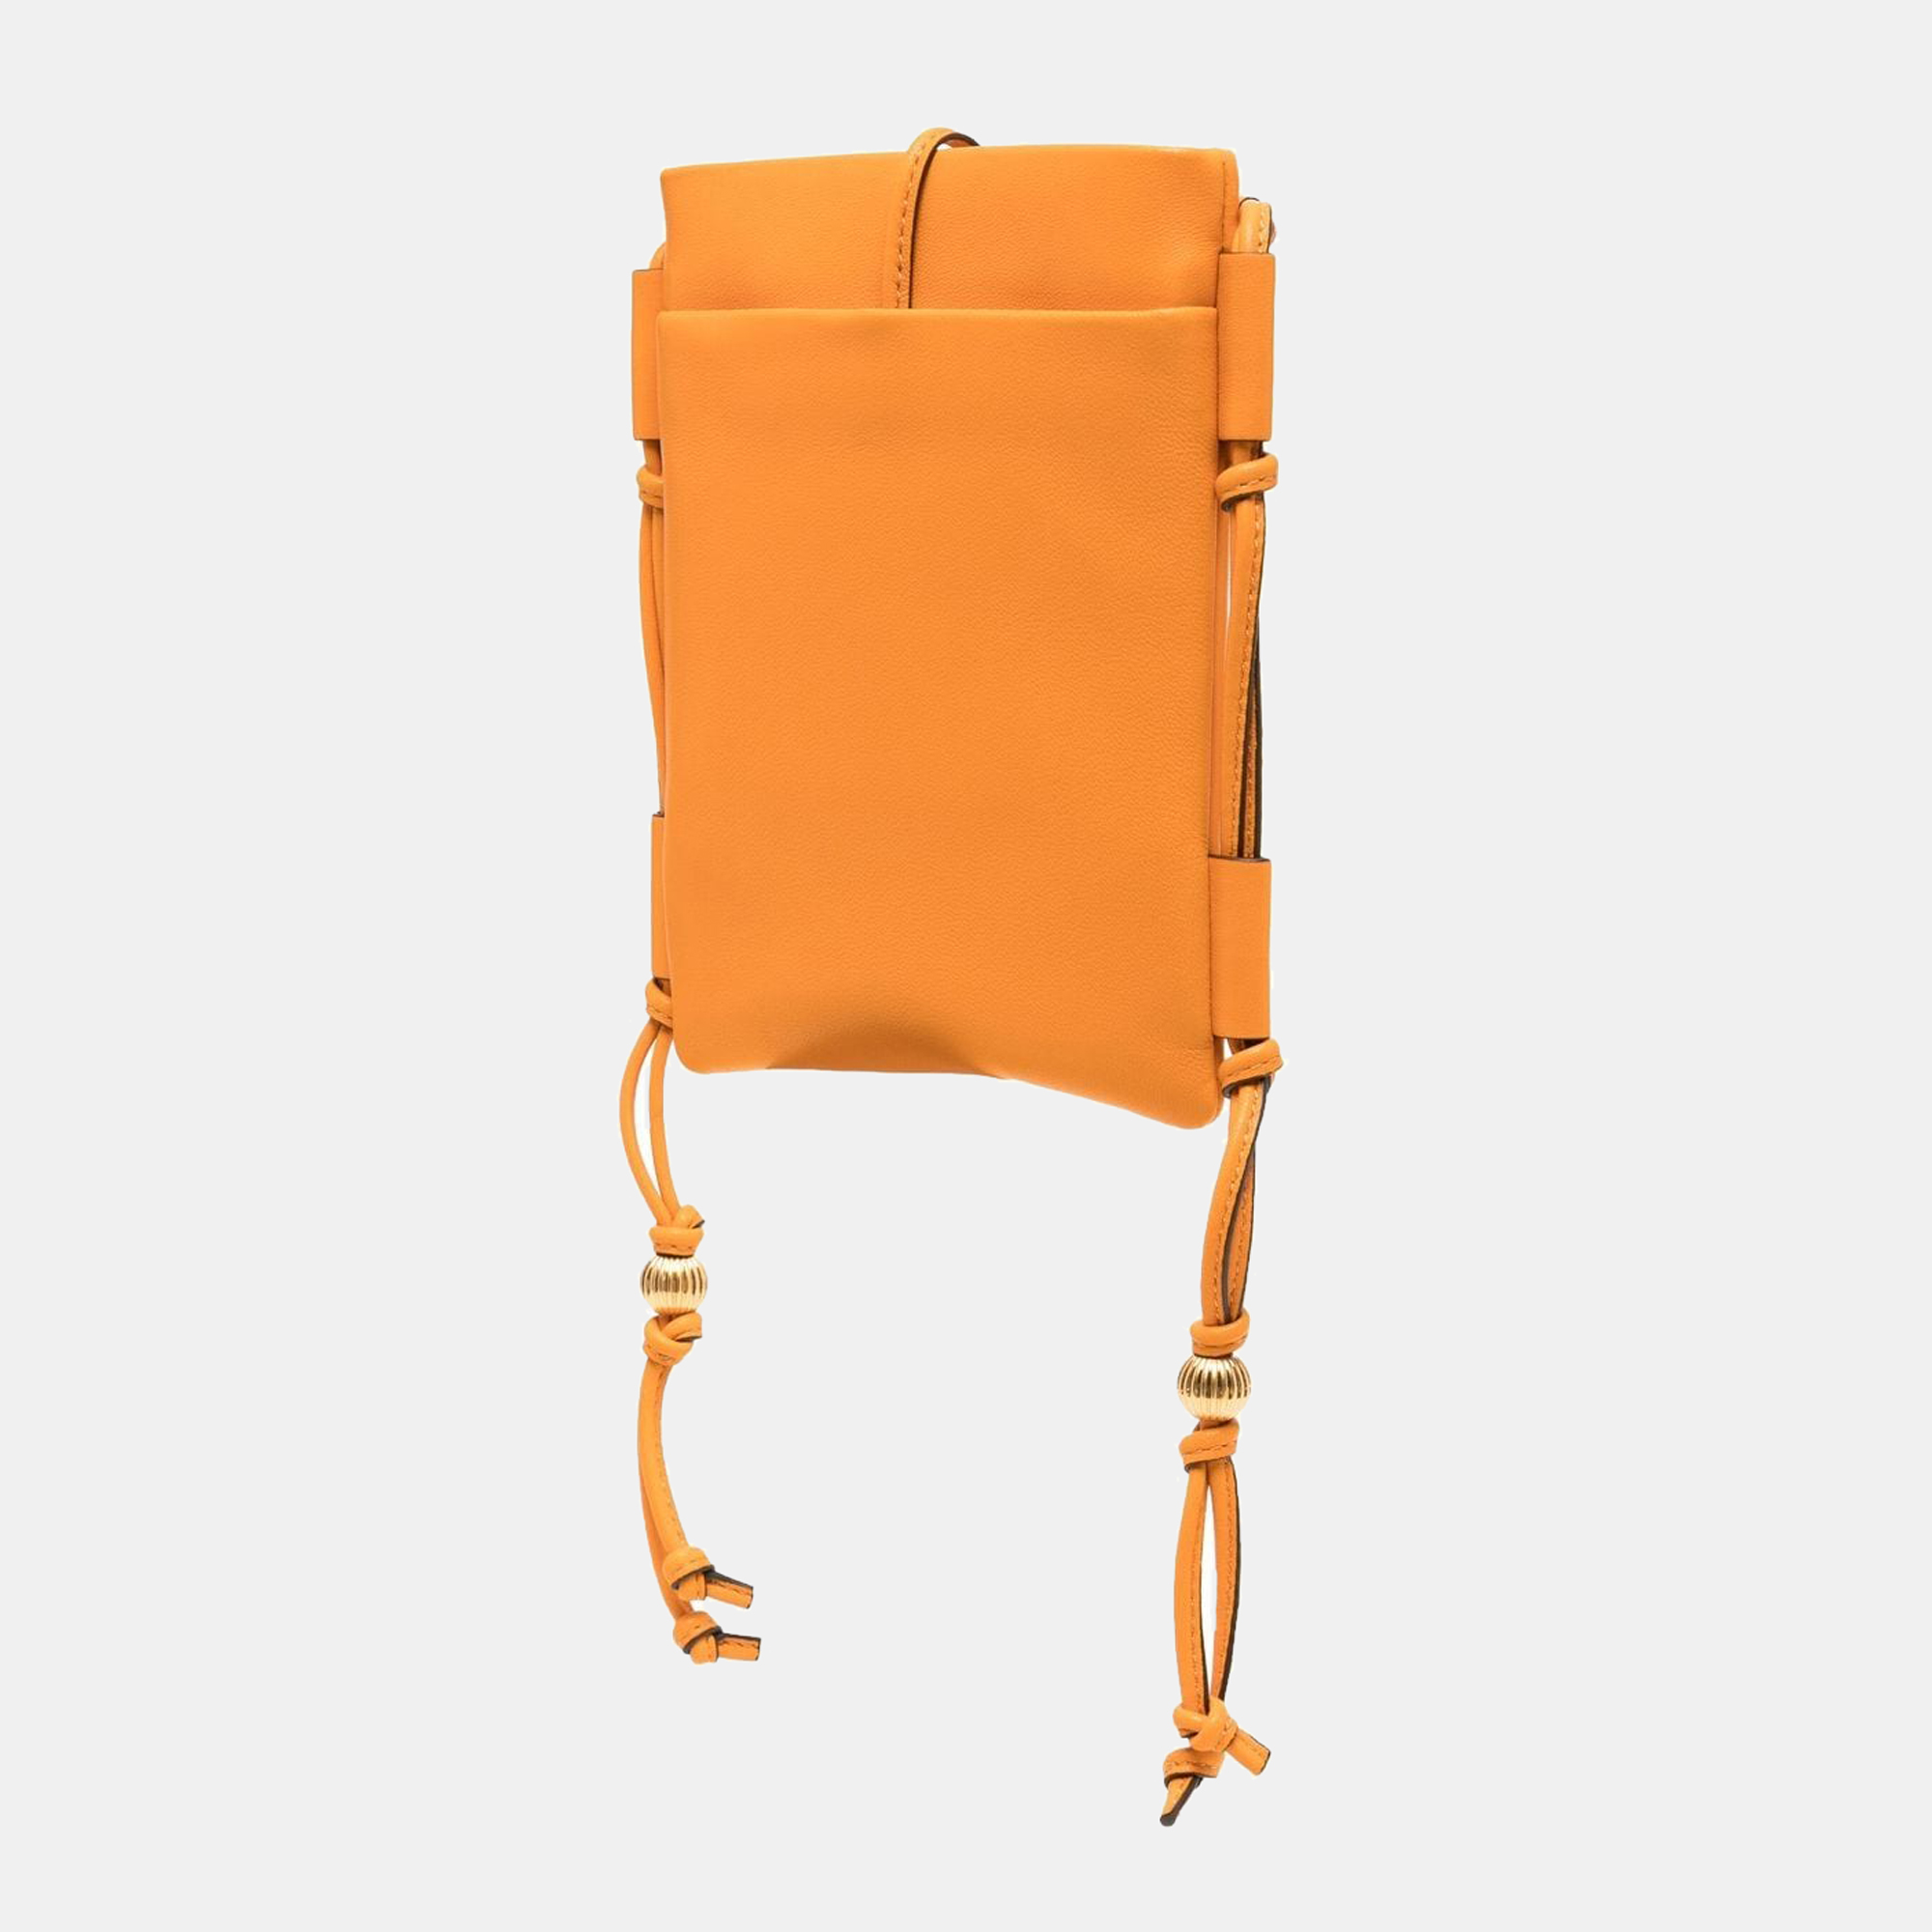 Tory Burch Orange - Leather - Phone Case Bag